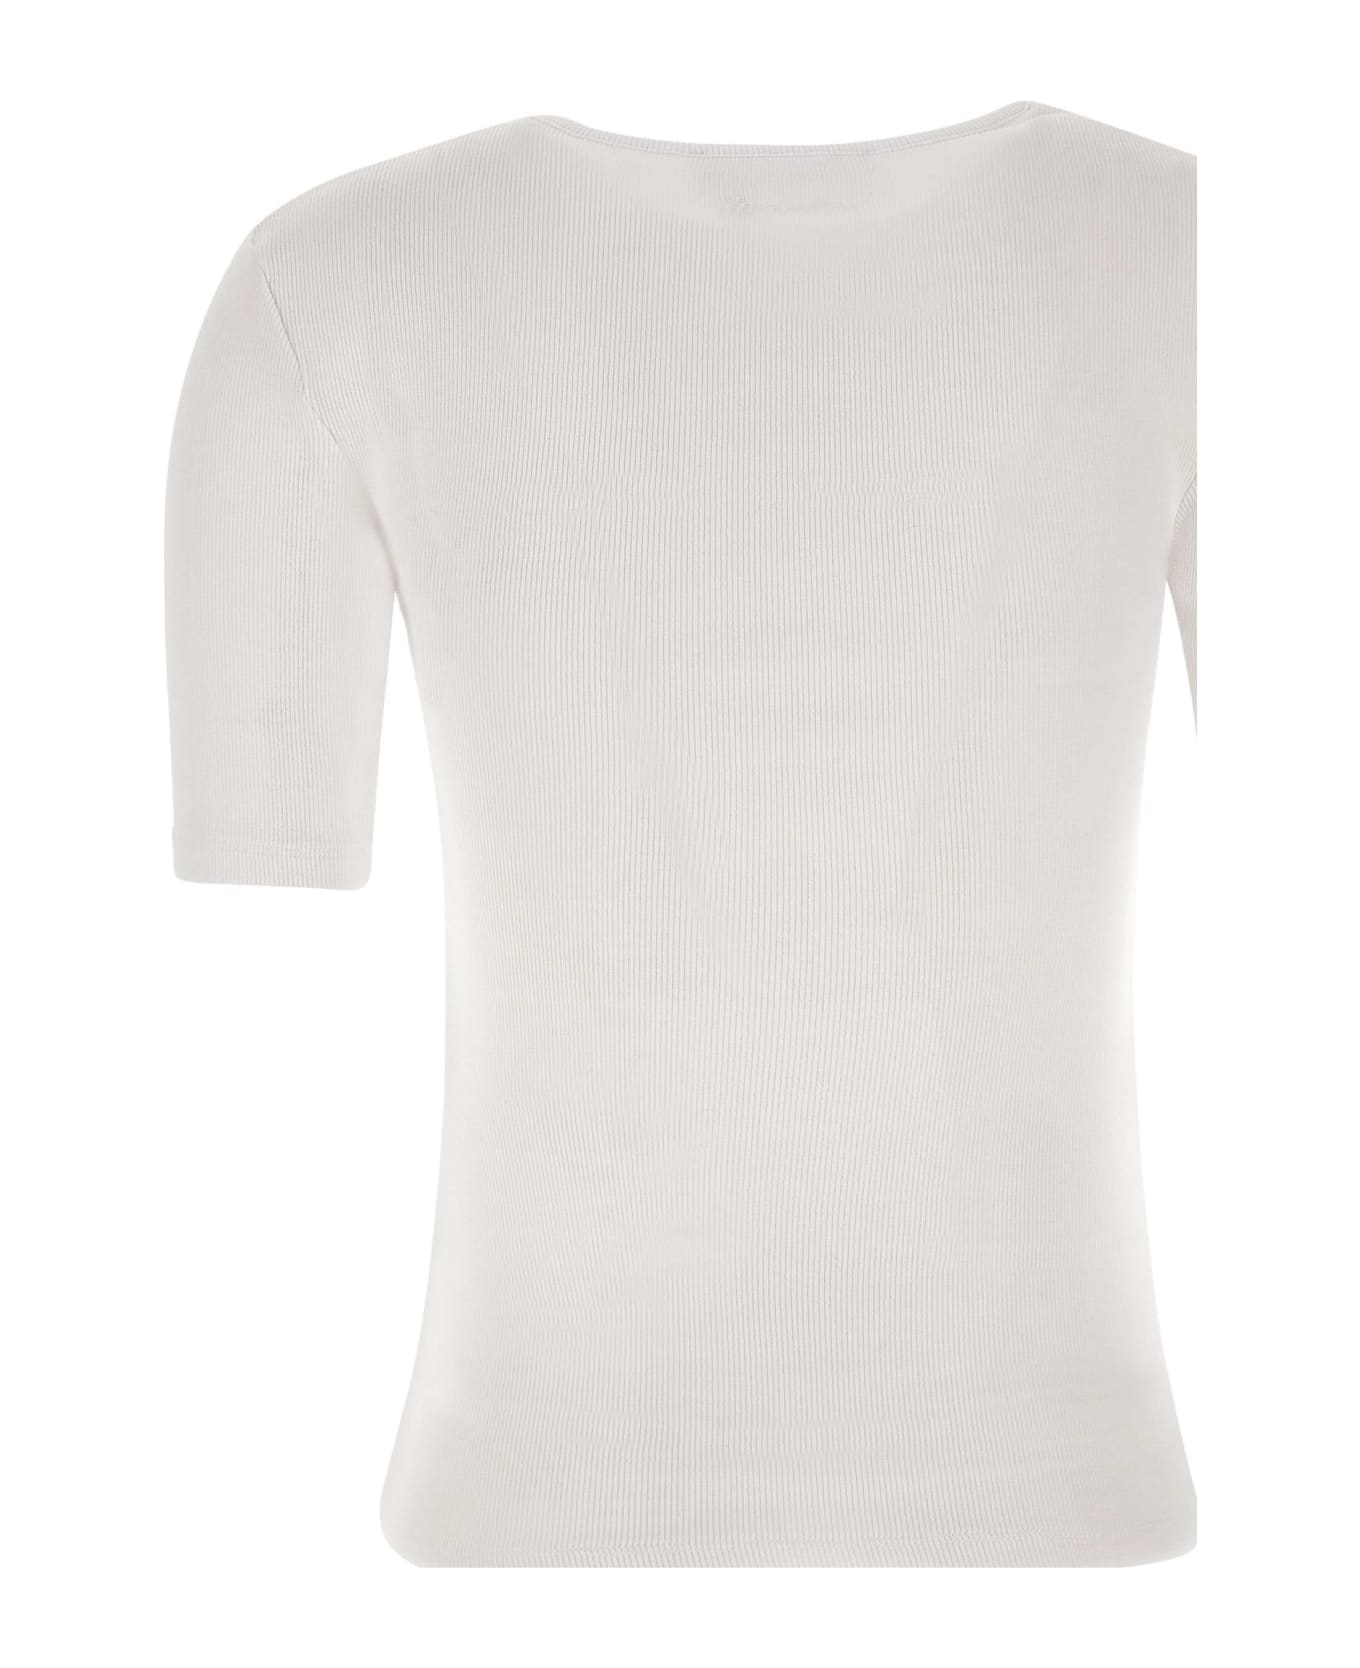 REMAIN Birger Christensen Cotton Jersey T-shirt - WHITE